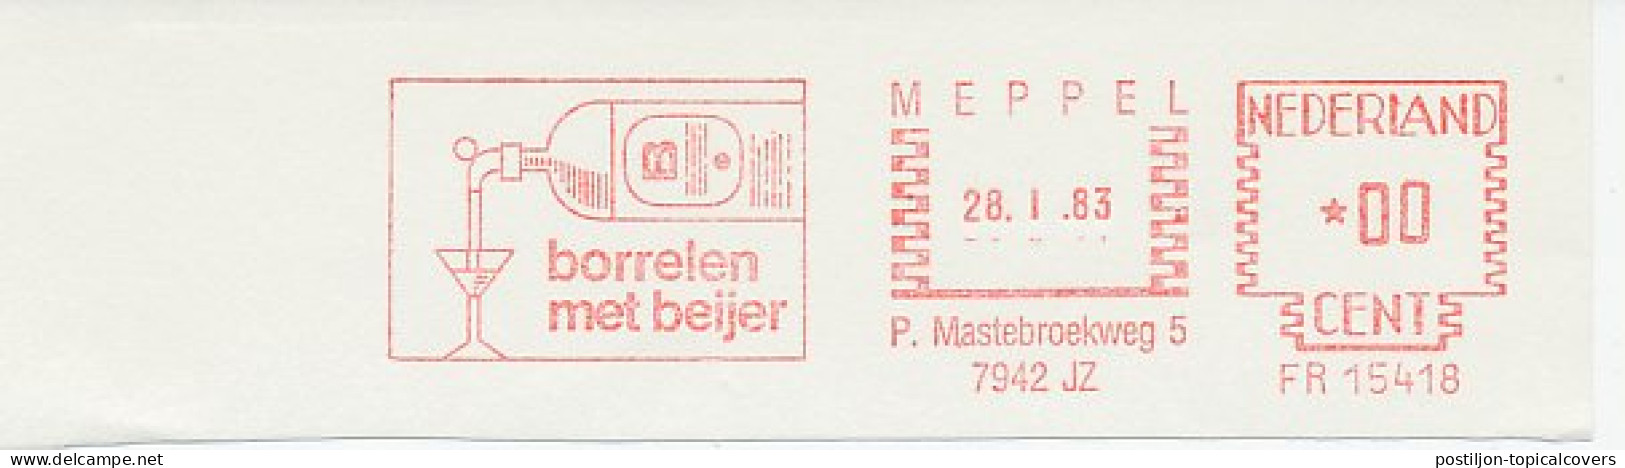 Meter Cut Netherlands 1983 Liquor - Wines & Alcohols